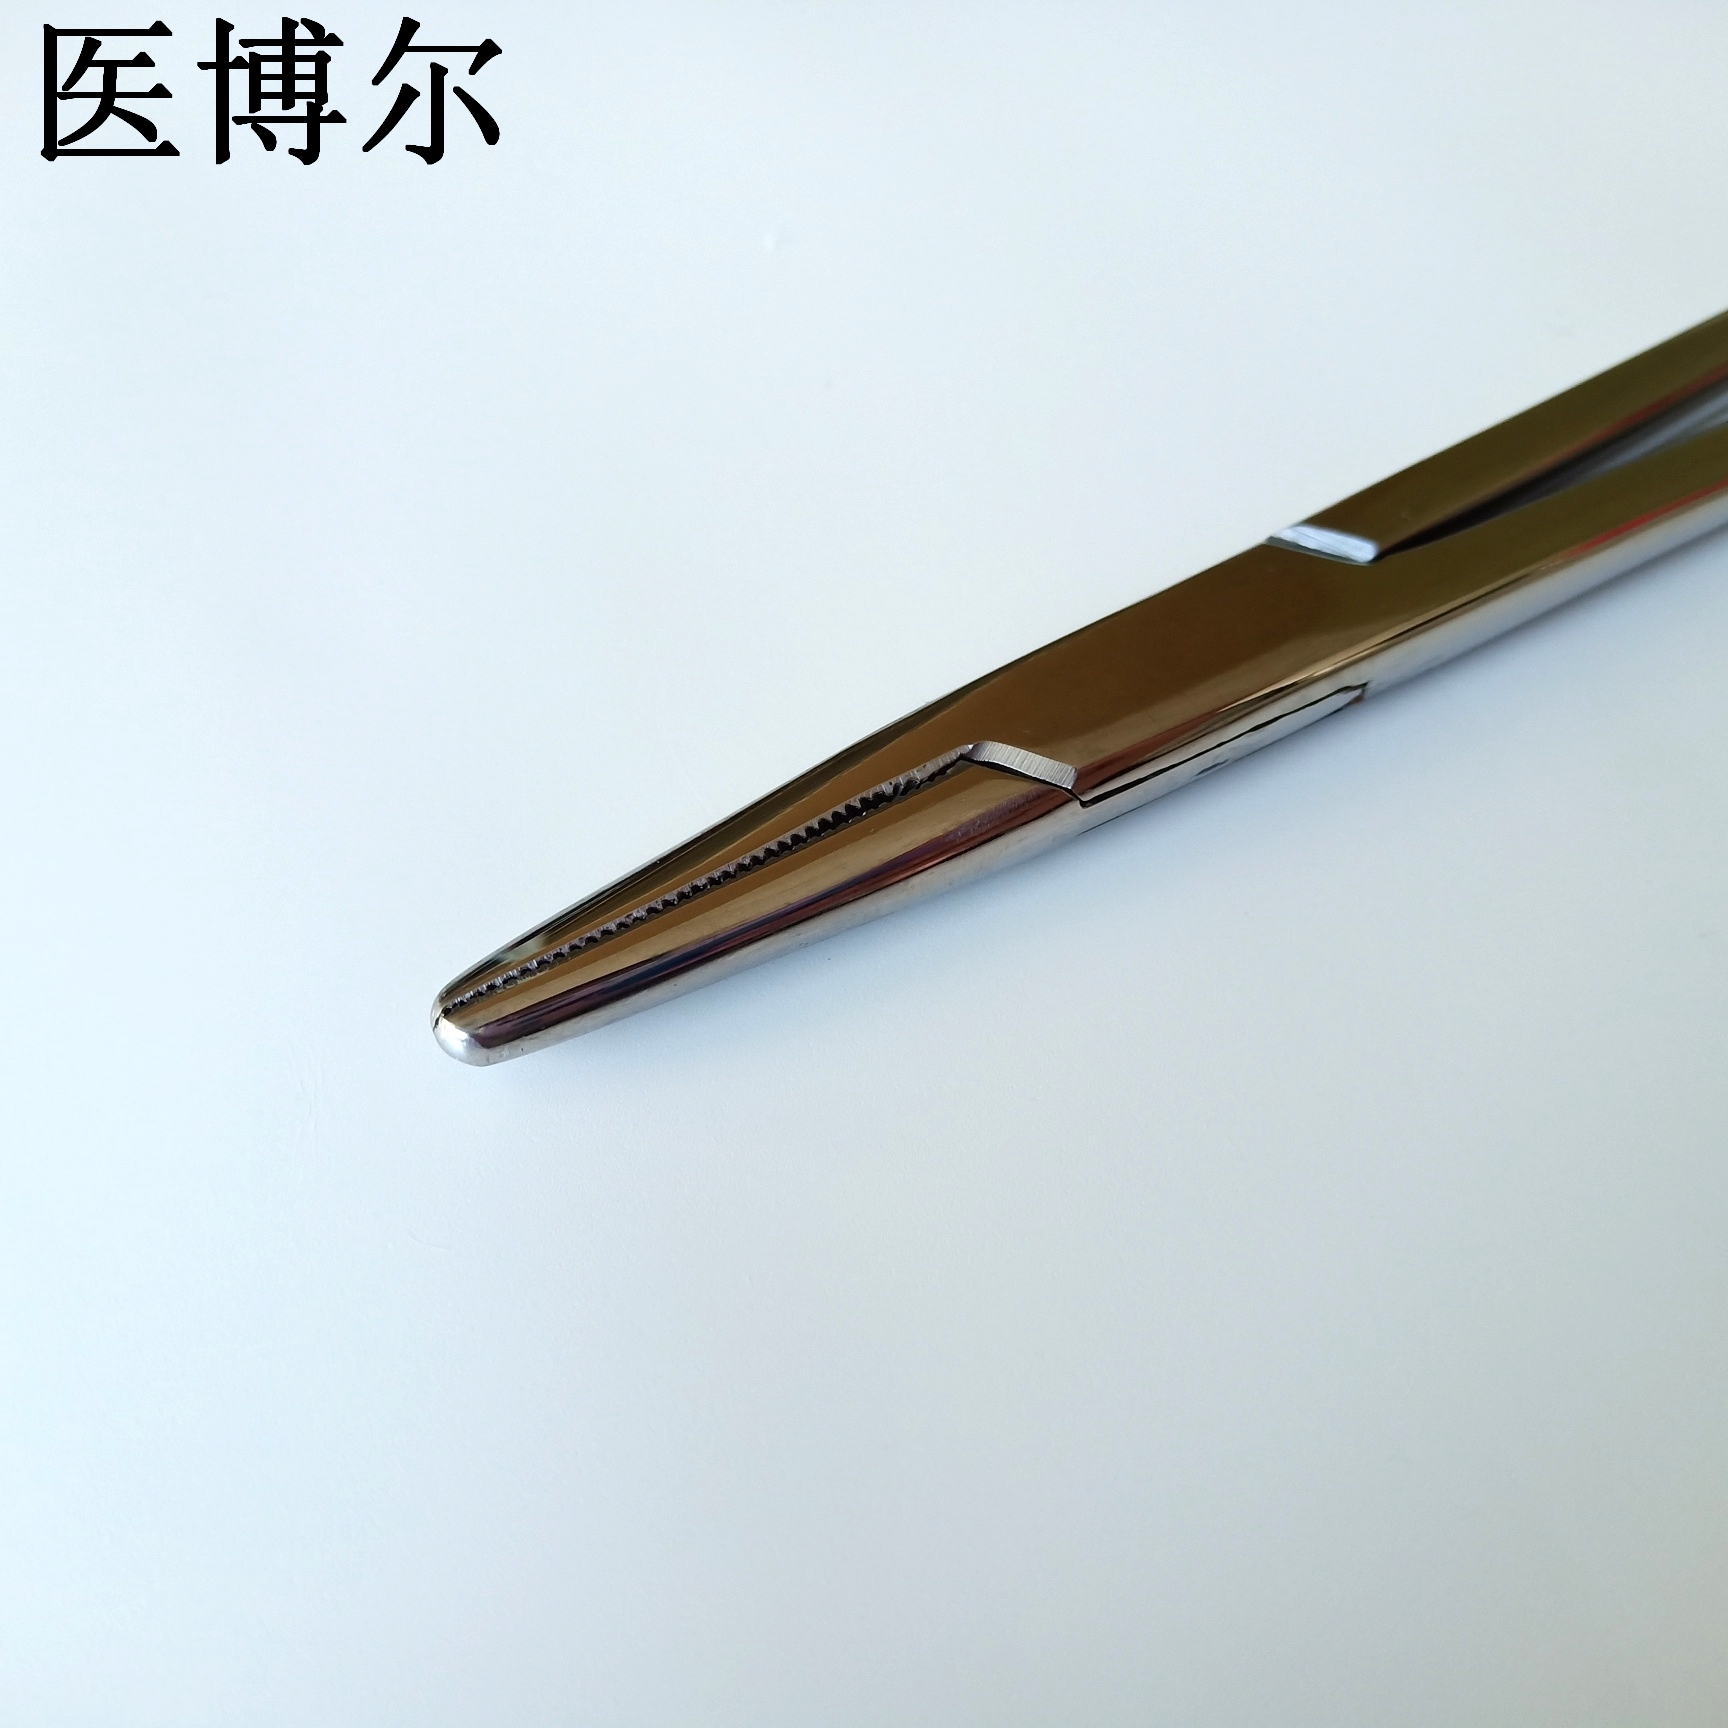 24cm持针器 (8)_看图王.jpg